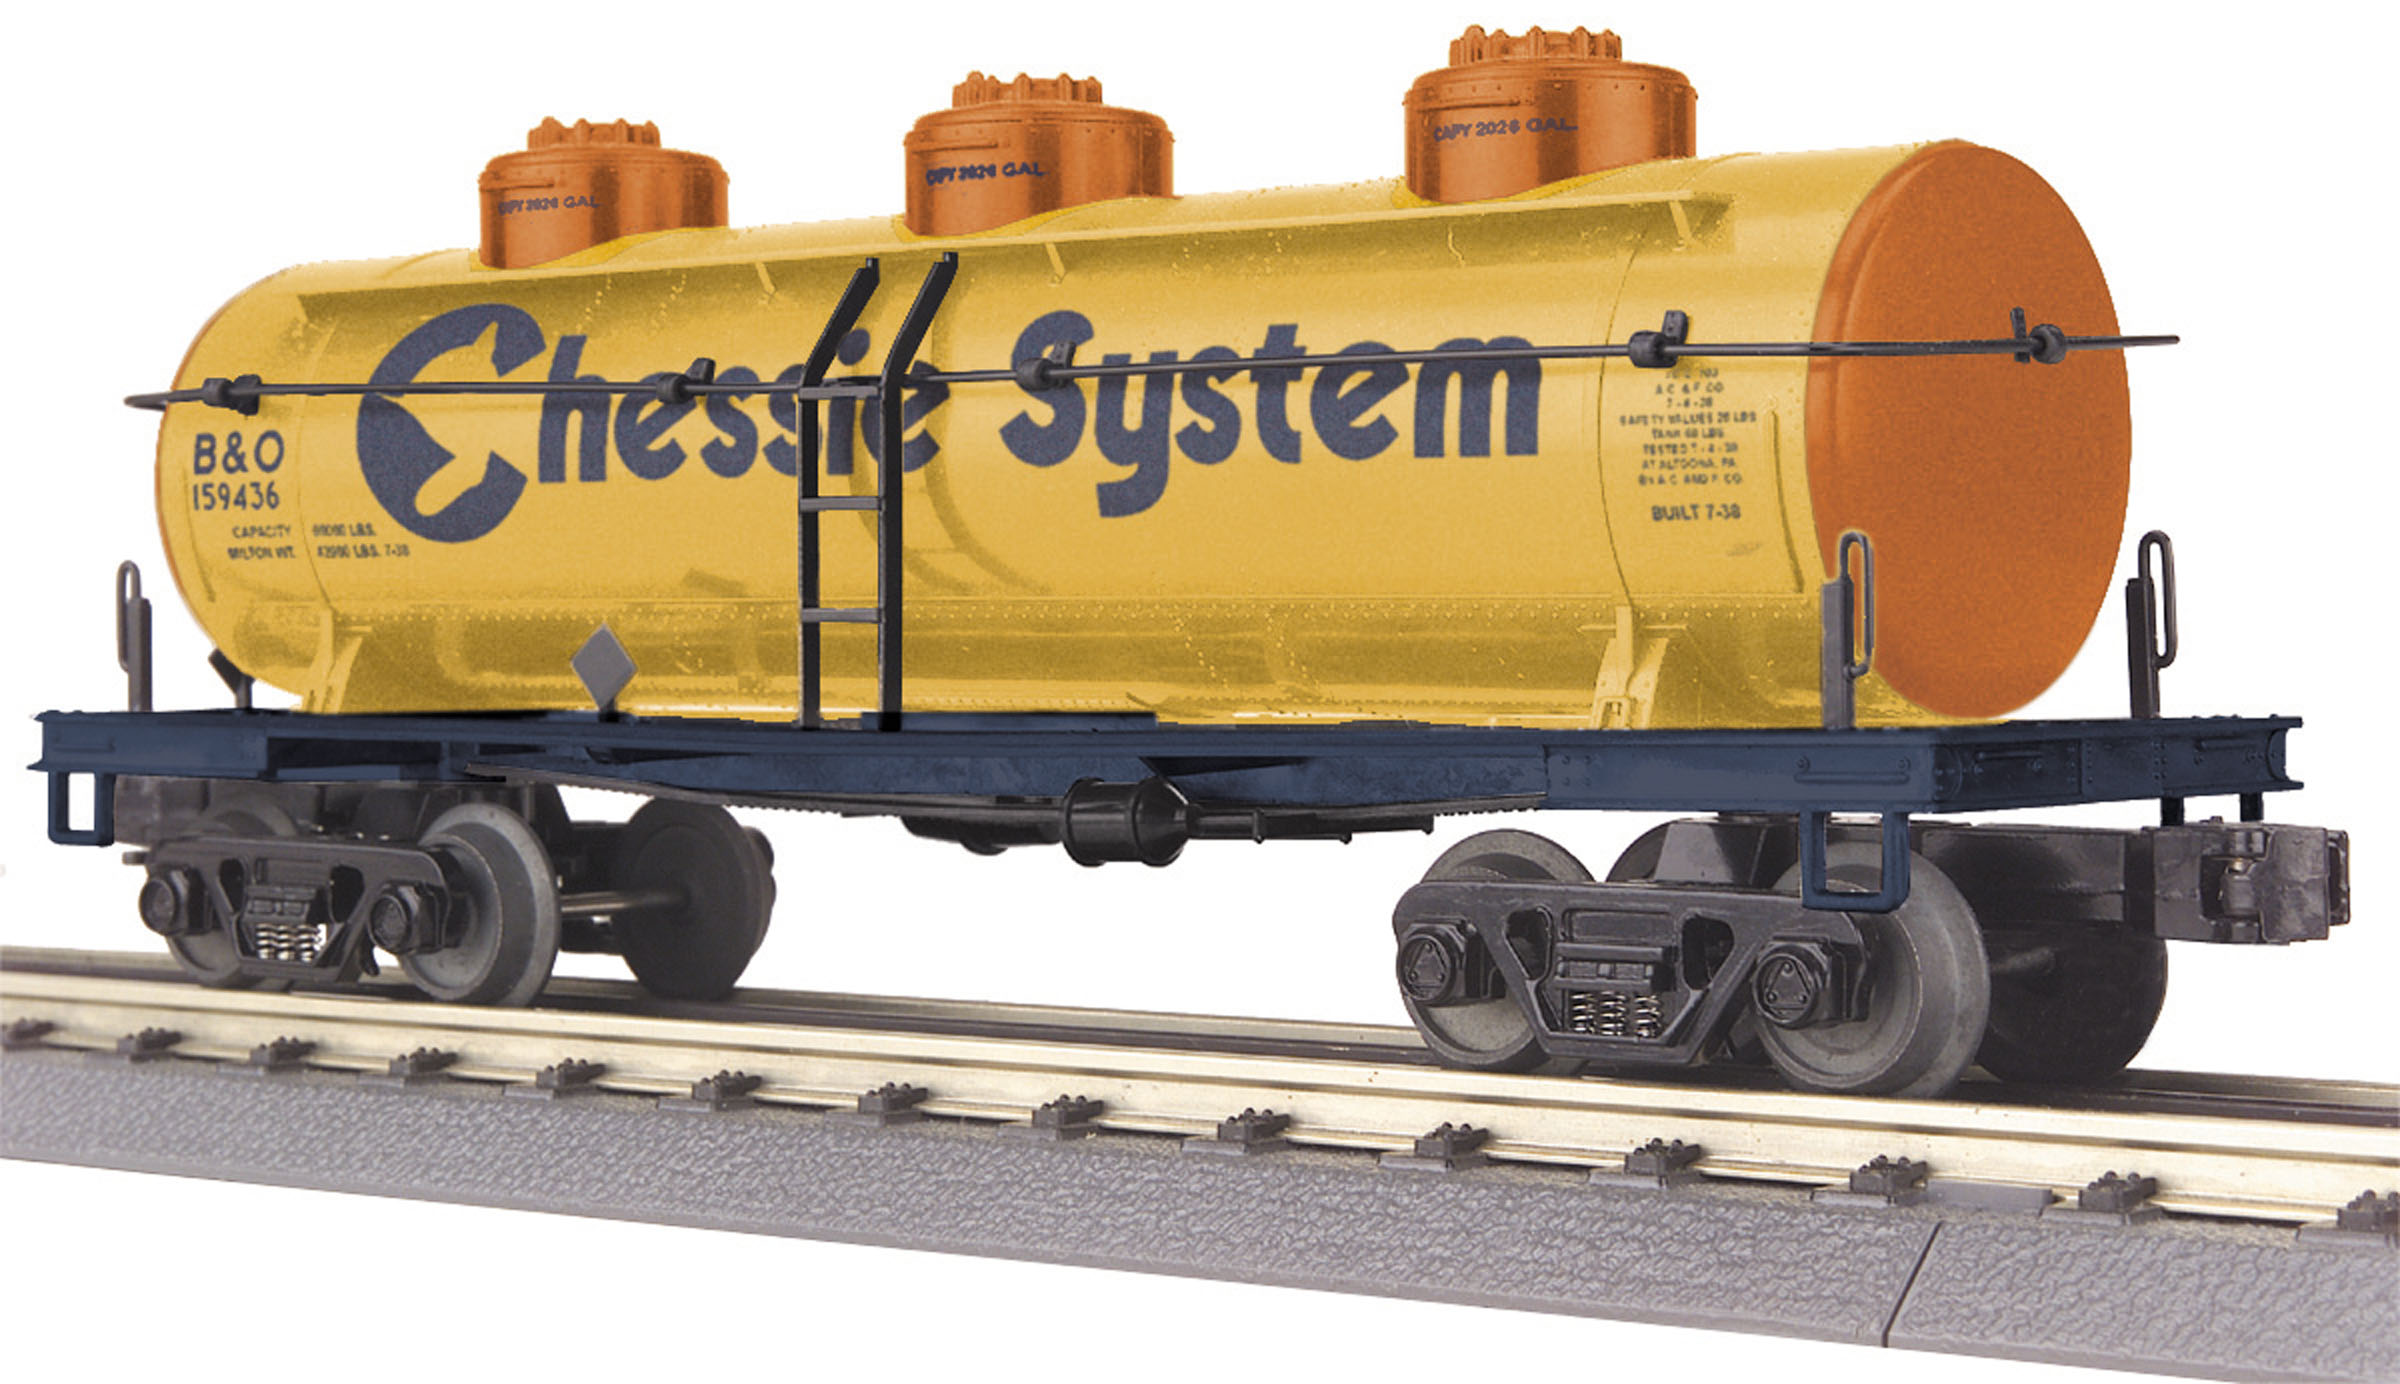 Durham industries Chessle System Co train car